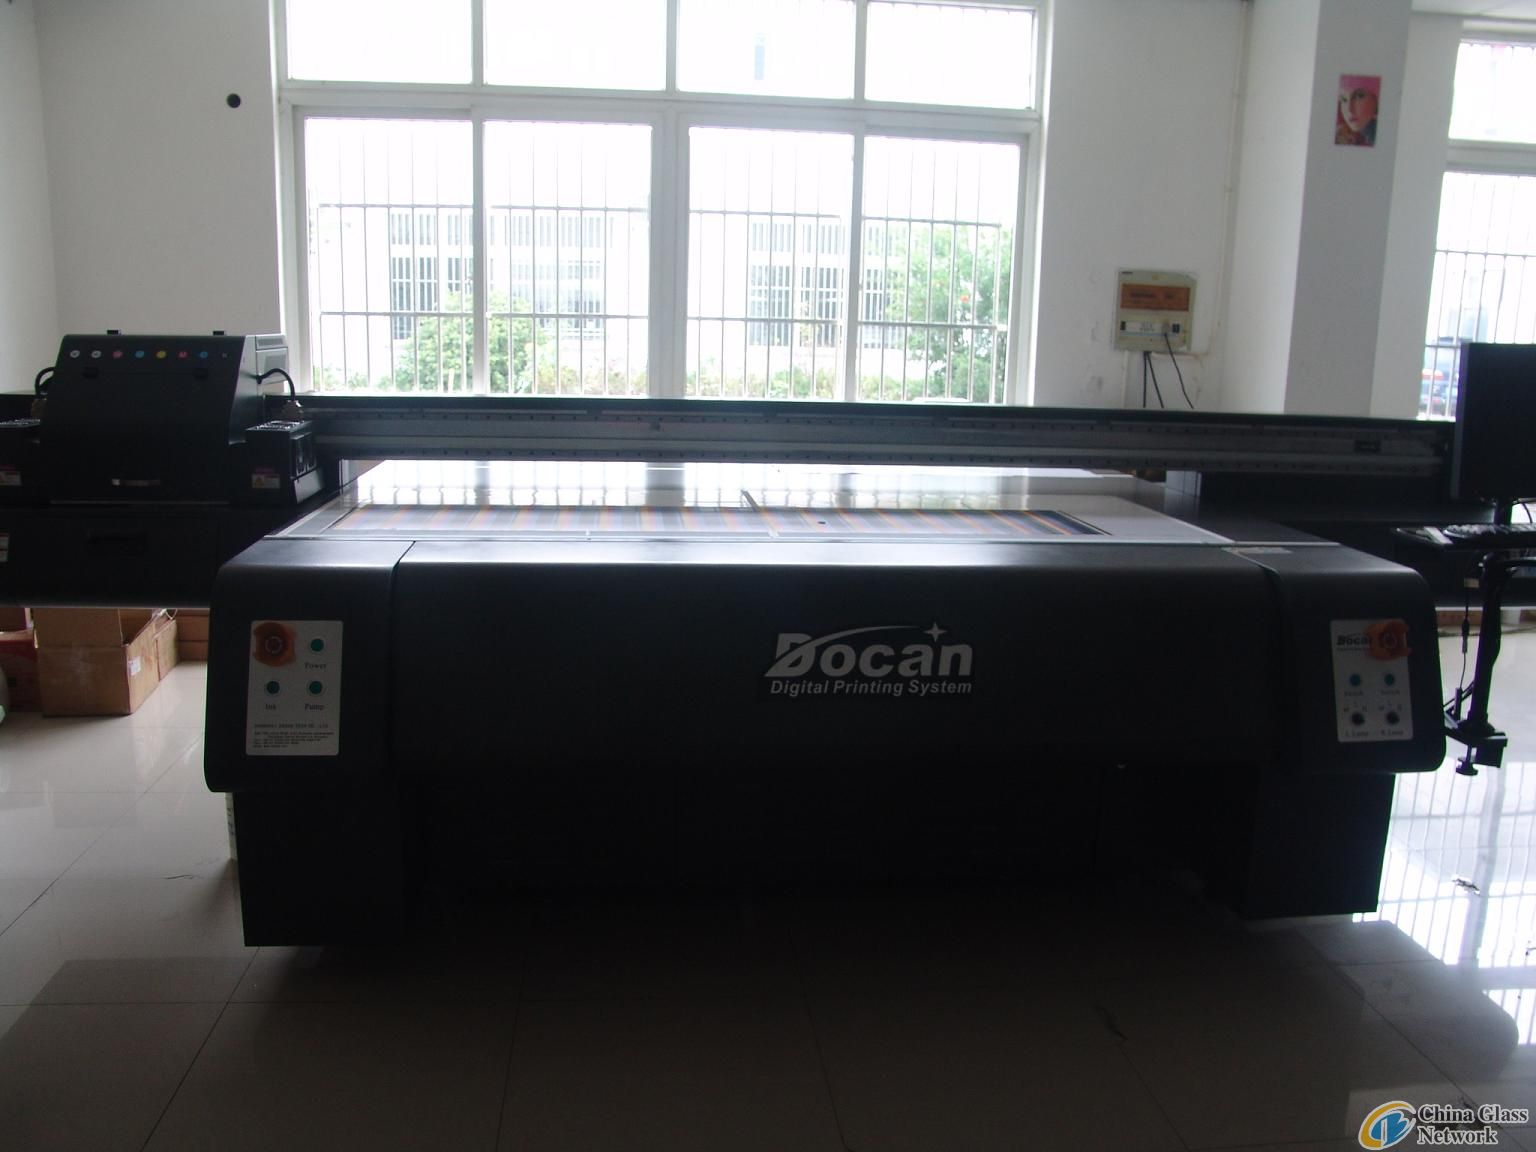 Docan M10 flatbed printer in large format